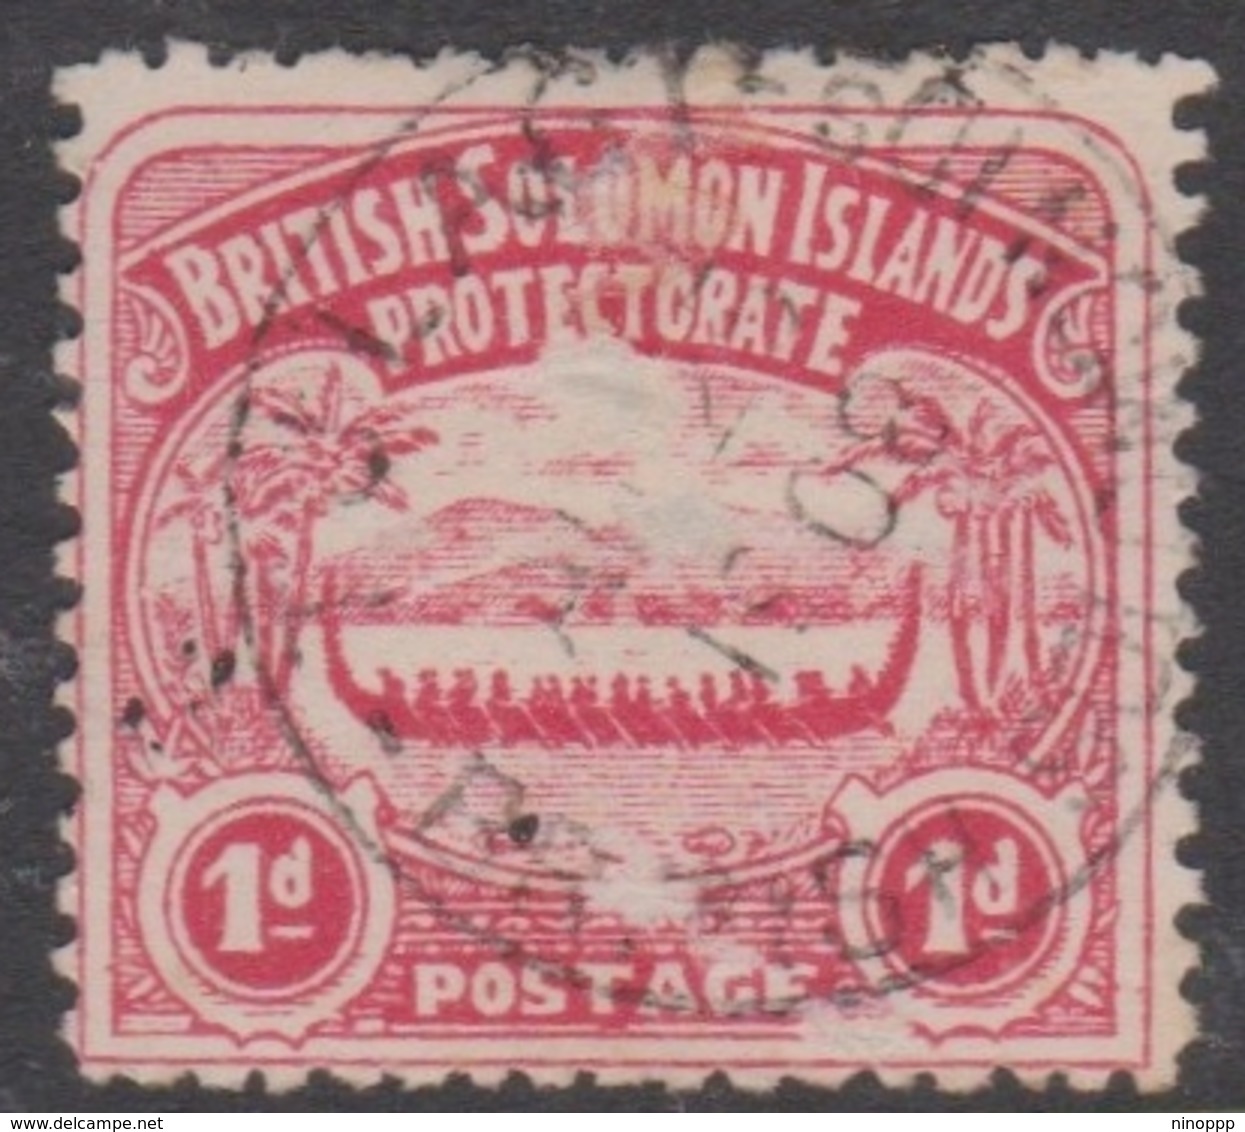 British Solomon Islands SG 2 1907 Large Canoe 1d Rose-carmine, Used, Small Thin - Salomonen (...-1978)